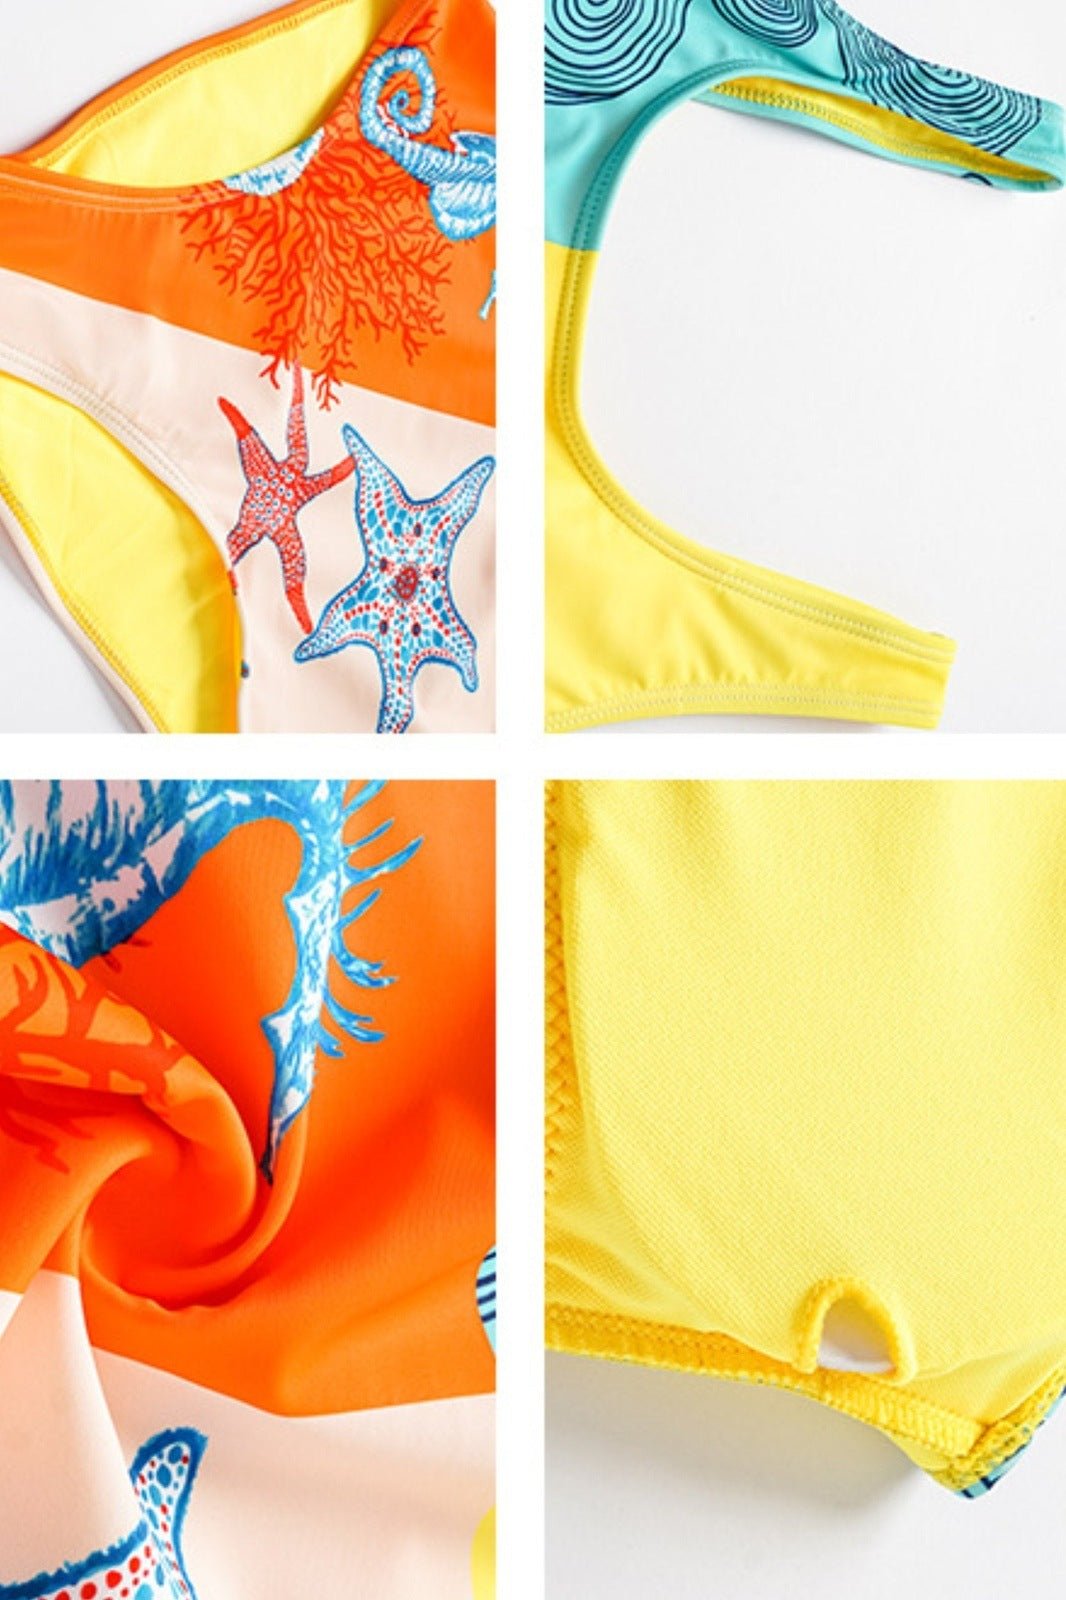 Mavis Ocean Printed Swimsuit